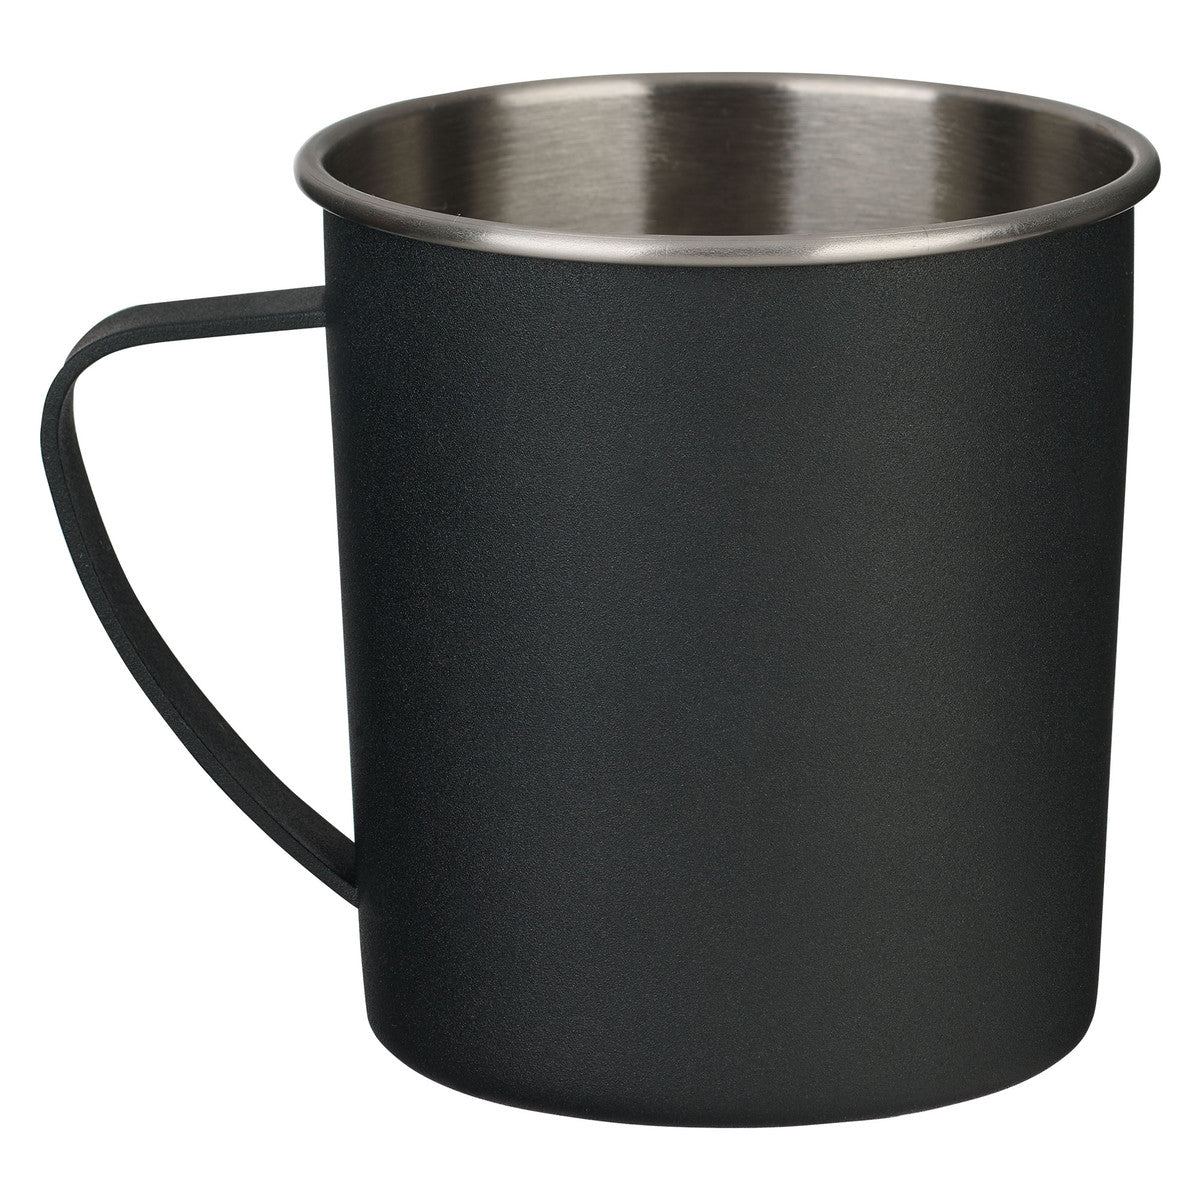 Camp-style Stainless Steel Mug, Do Not Be Shaken